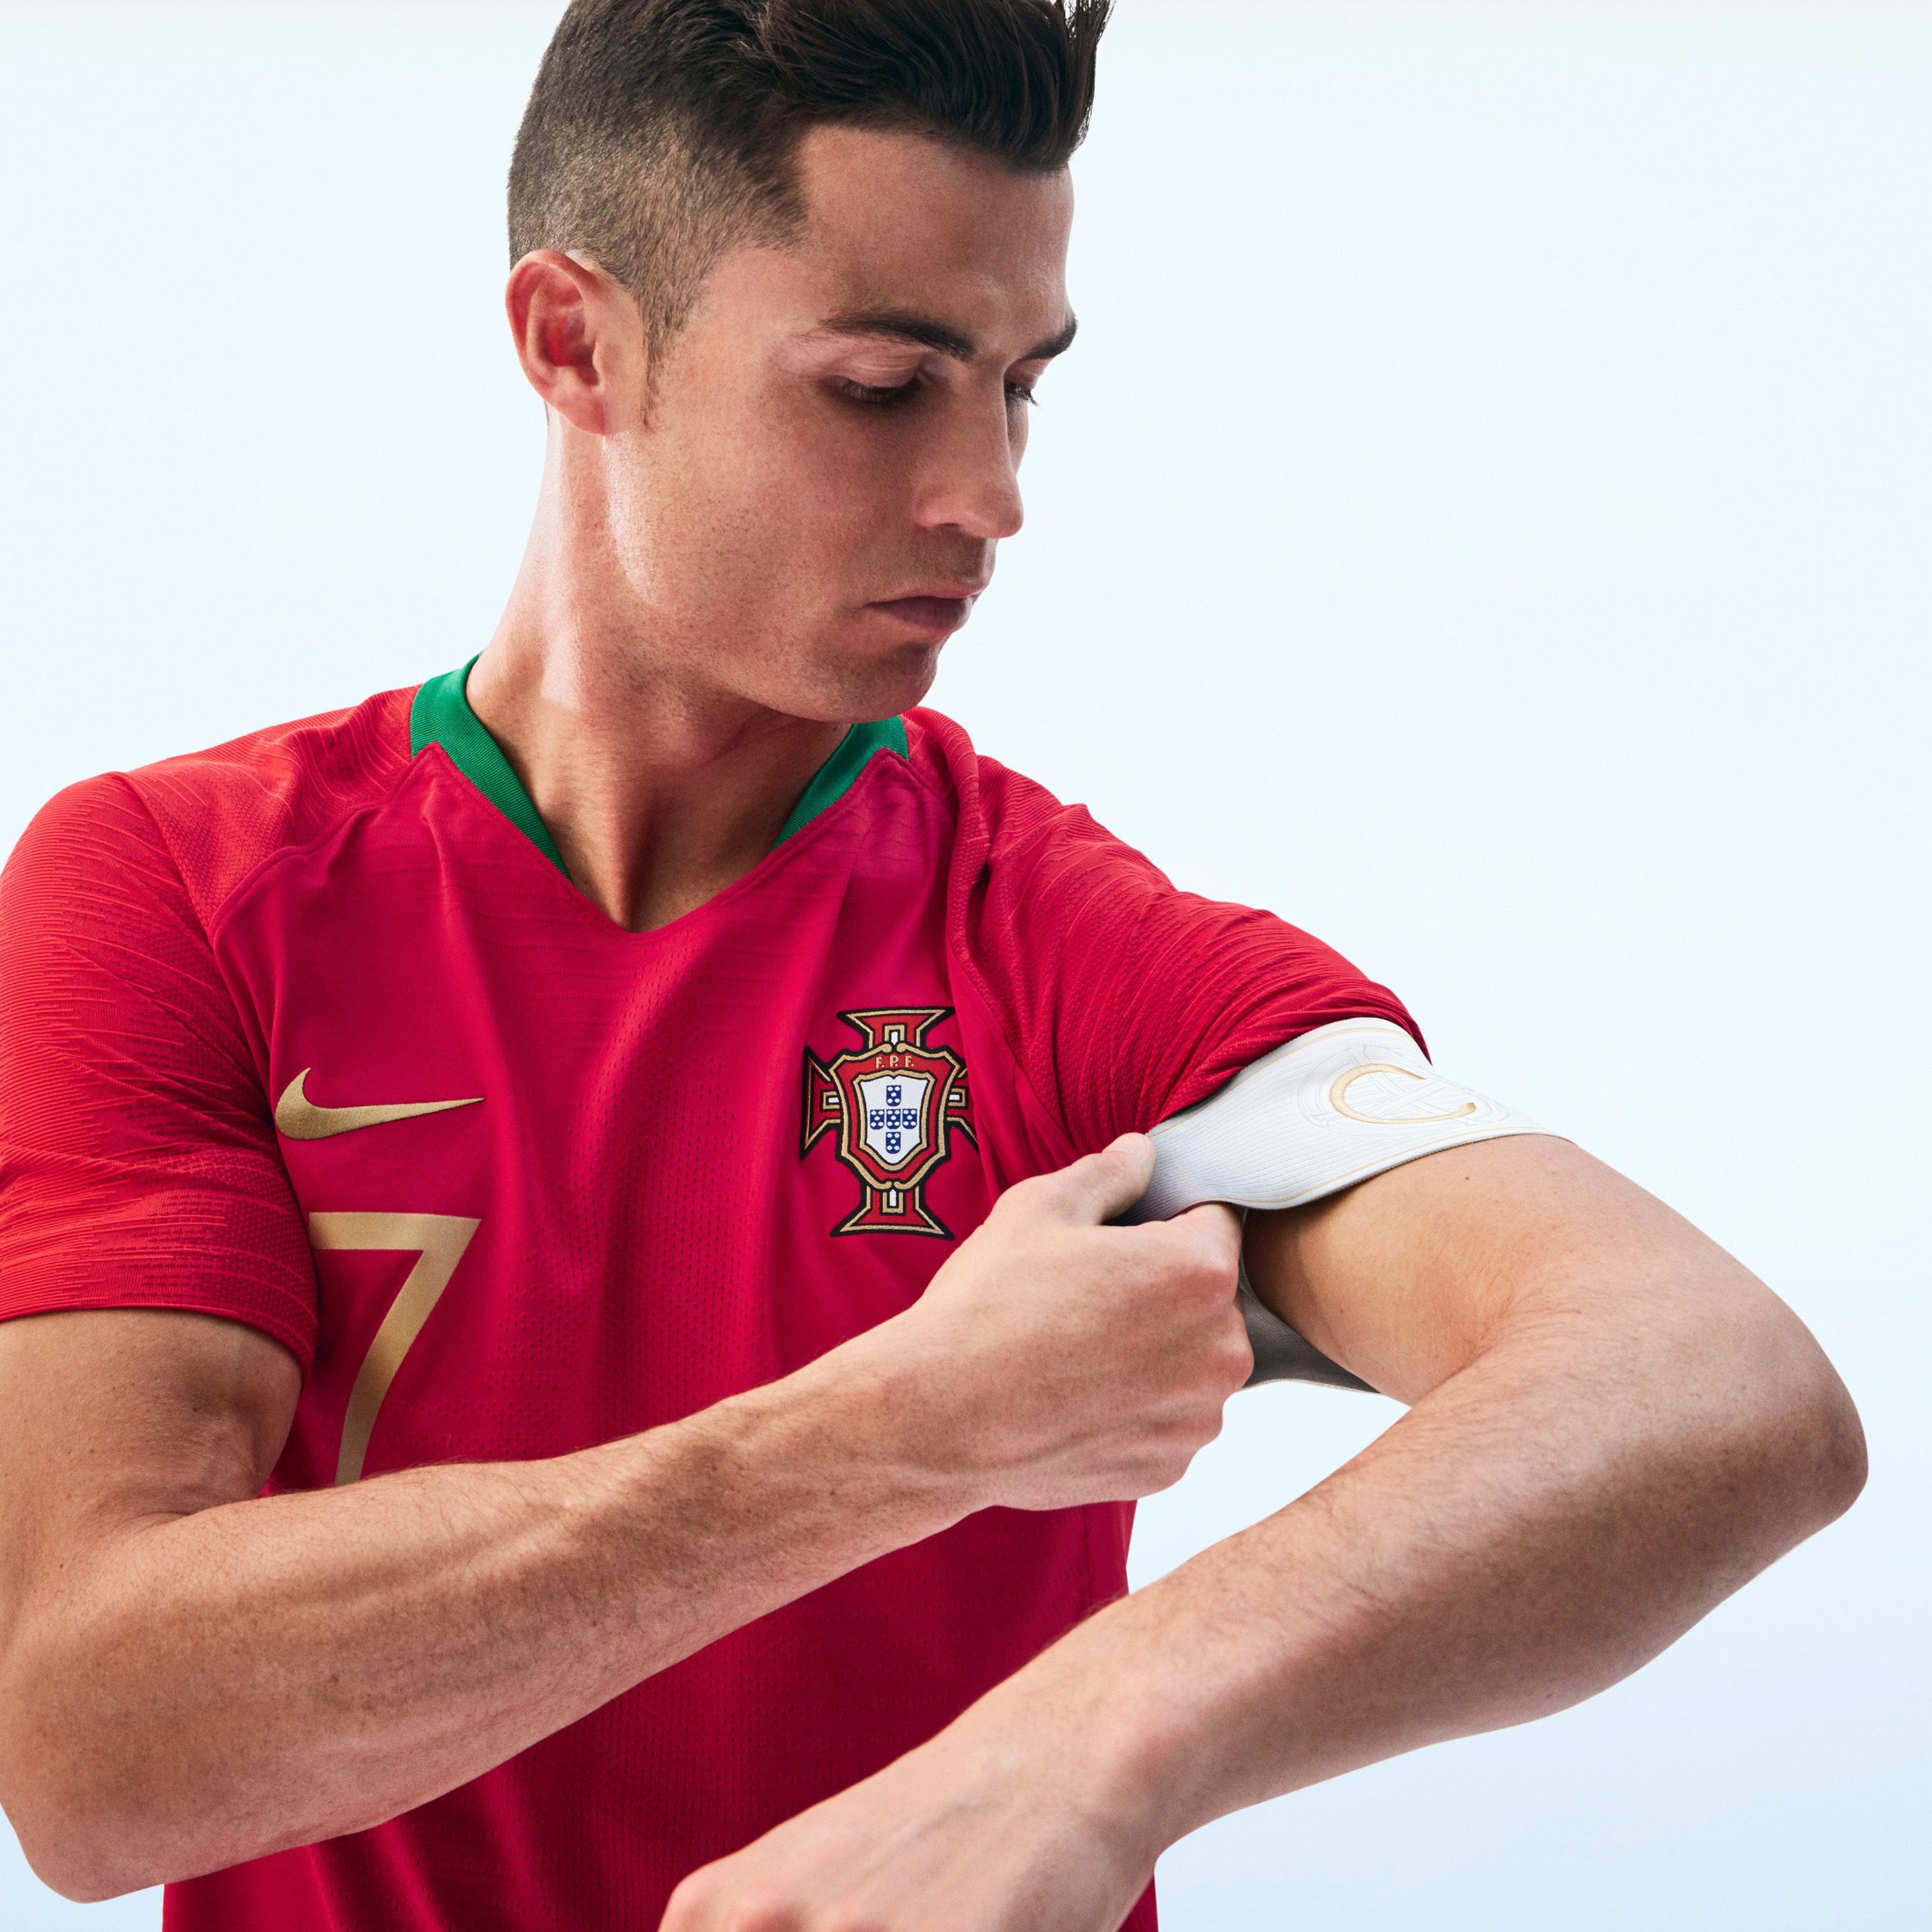 Cristiano Ronaldo 4k 2018 iPad Pro Retina Display HD 4k Wallpaper, Image, Background, Photo and Picture